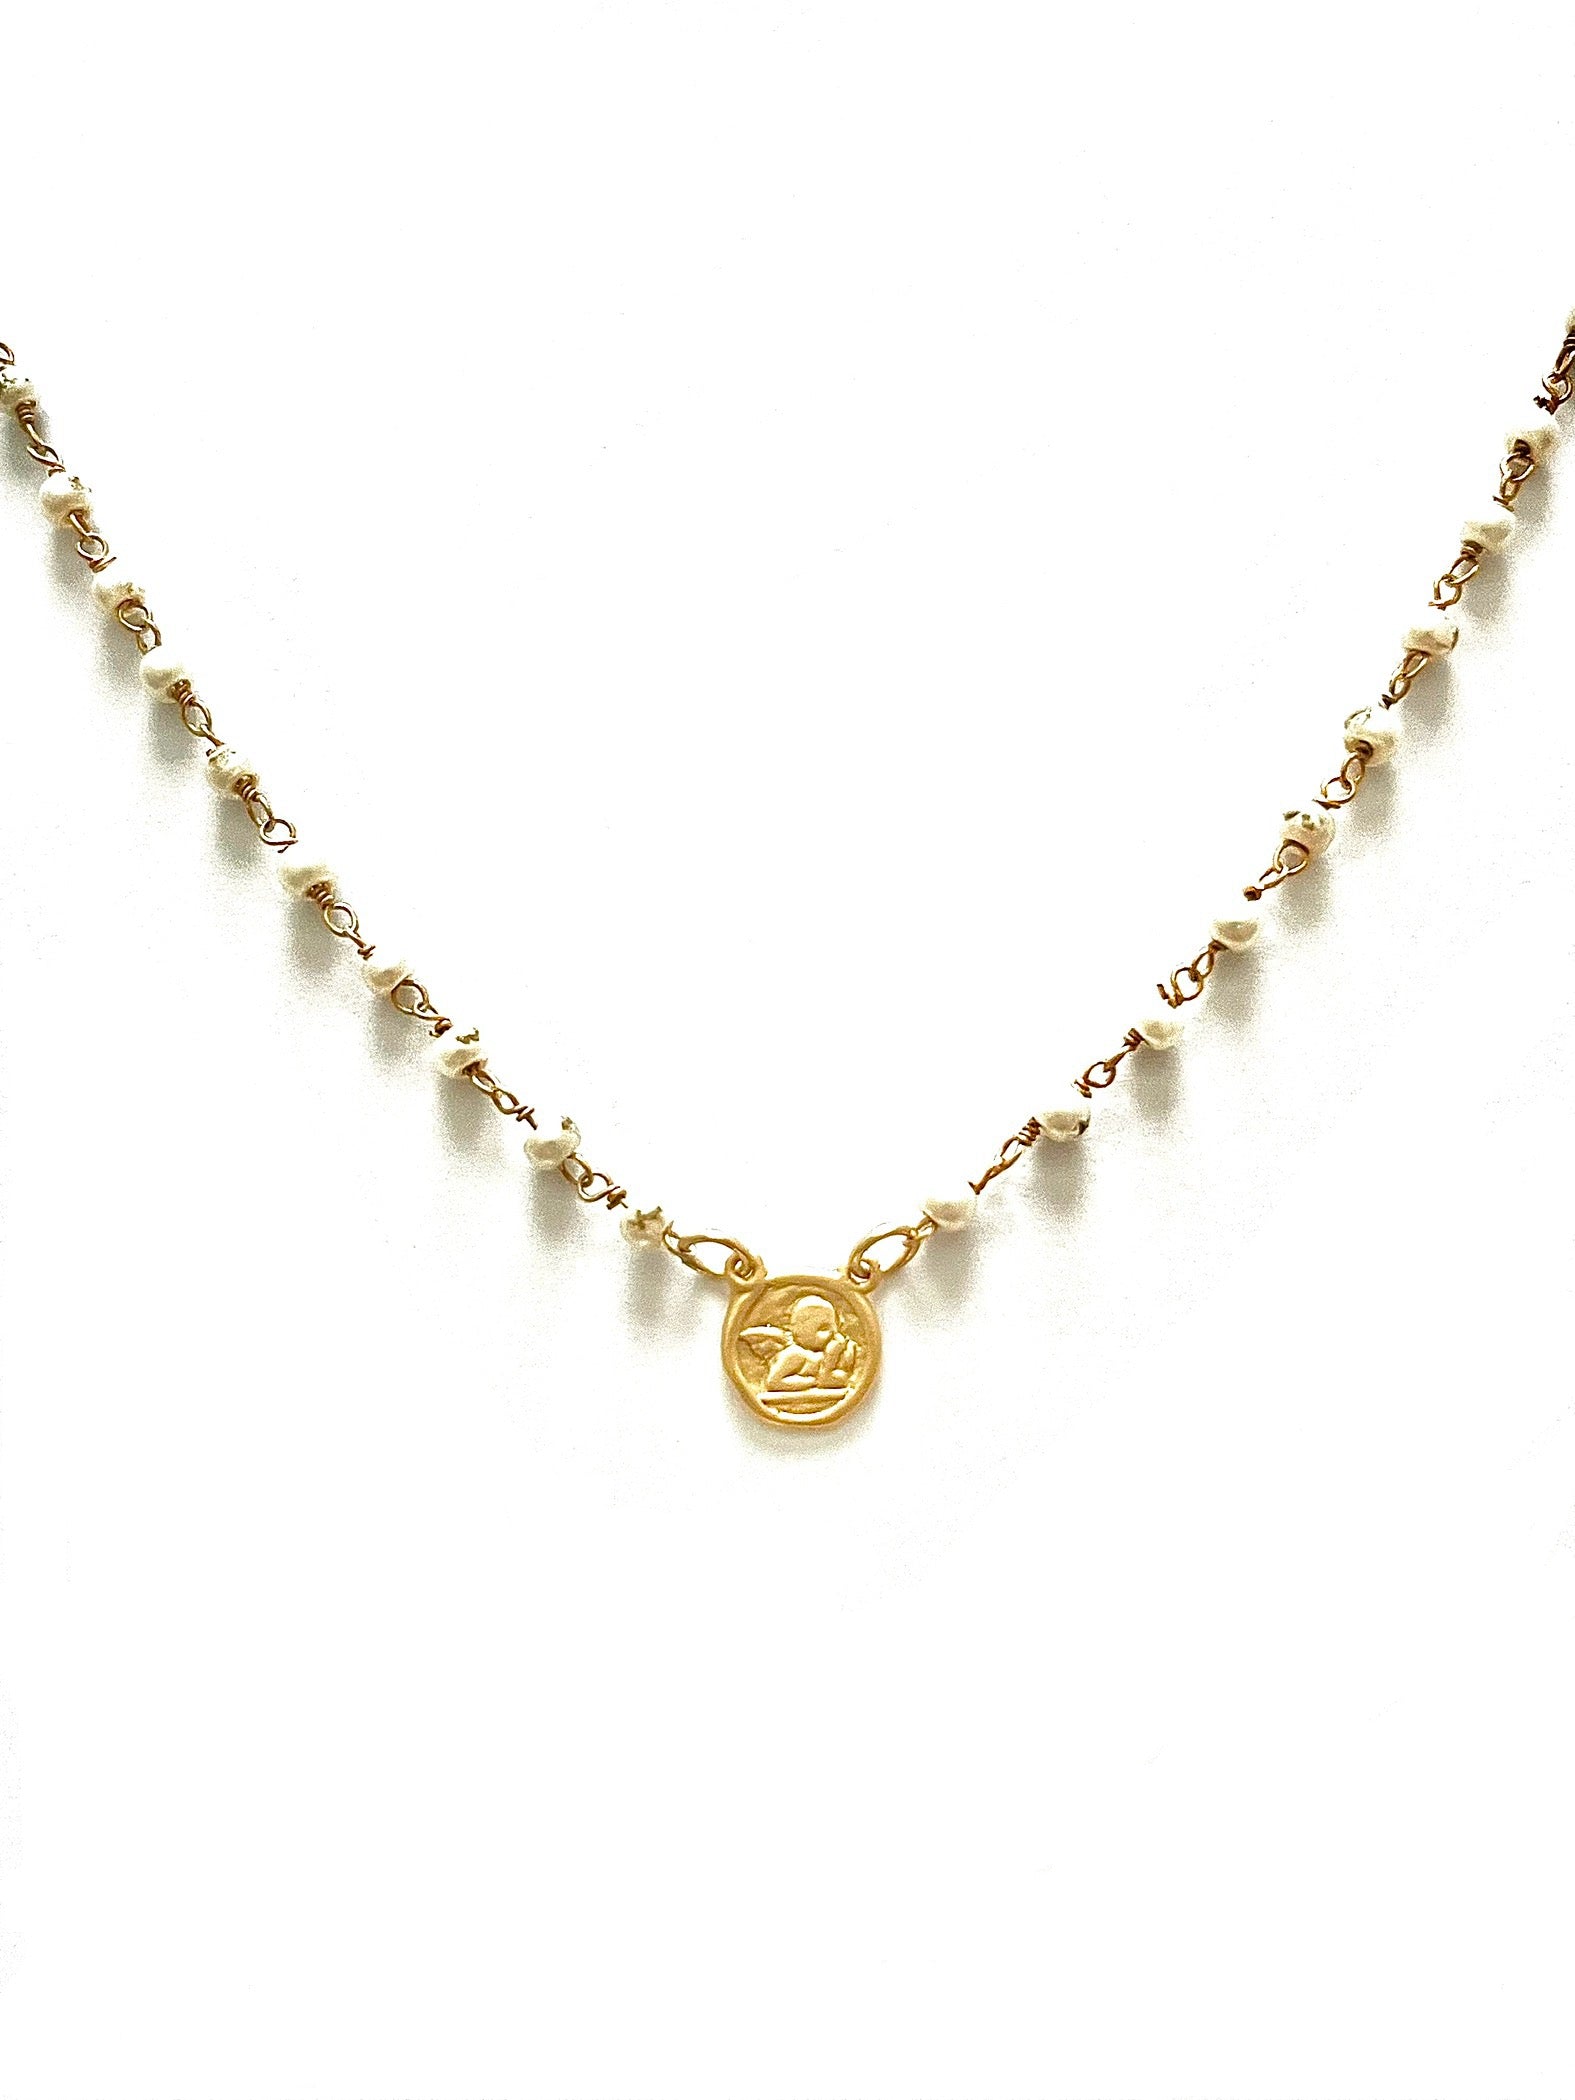 Cherub - pearl rosary necklace with vermeil cherub pendant